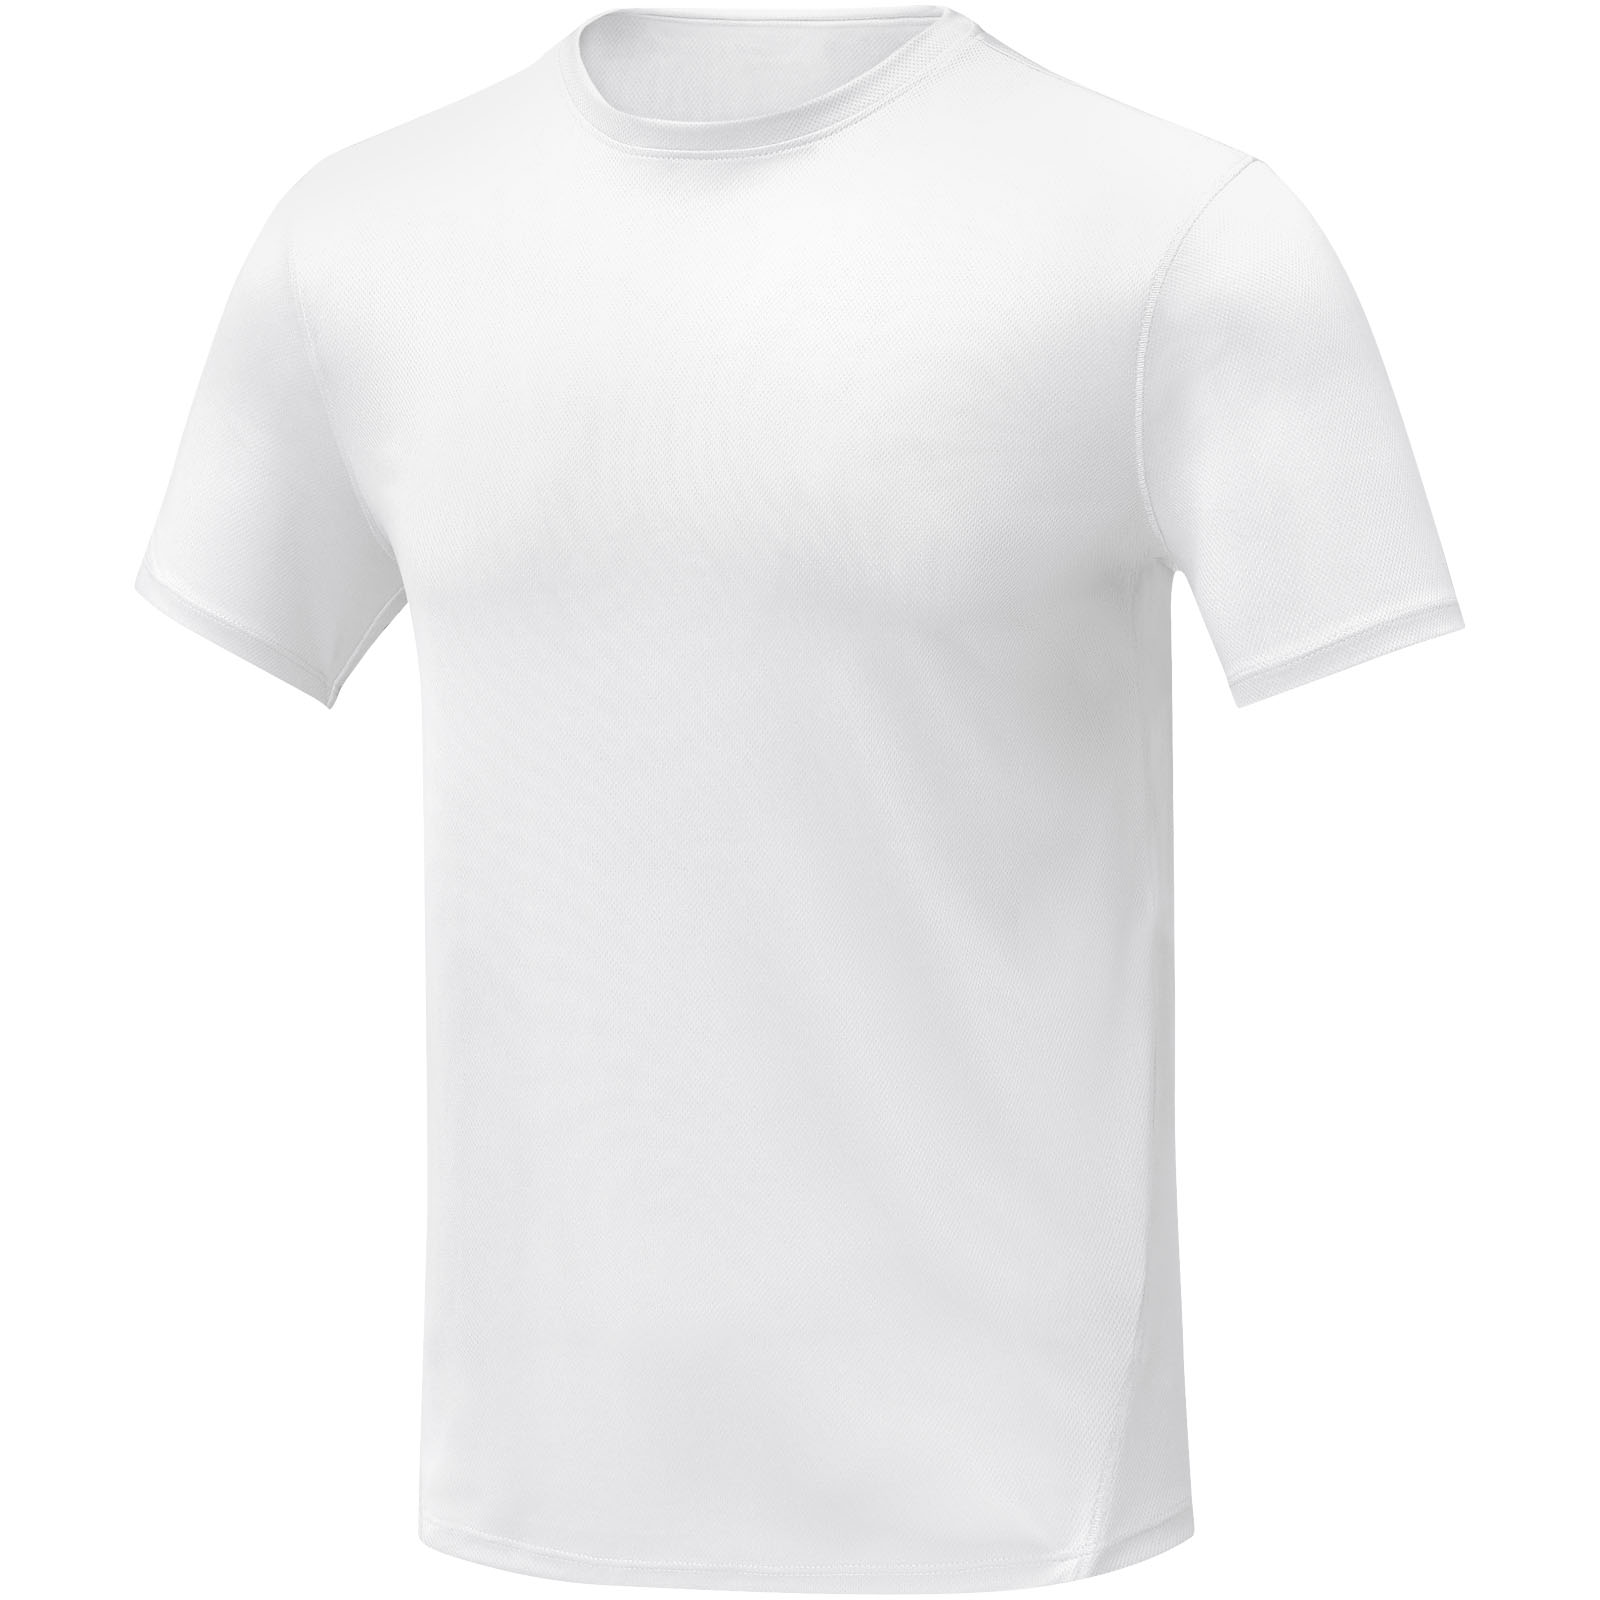 Advertising T-shirts - Kratos short sleeve men's cool fit t-shirt